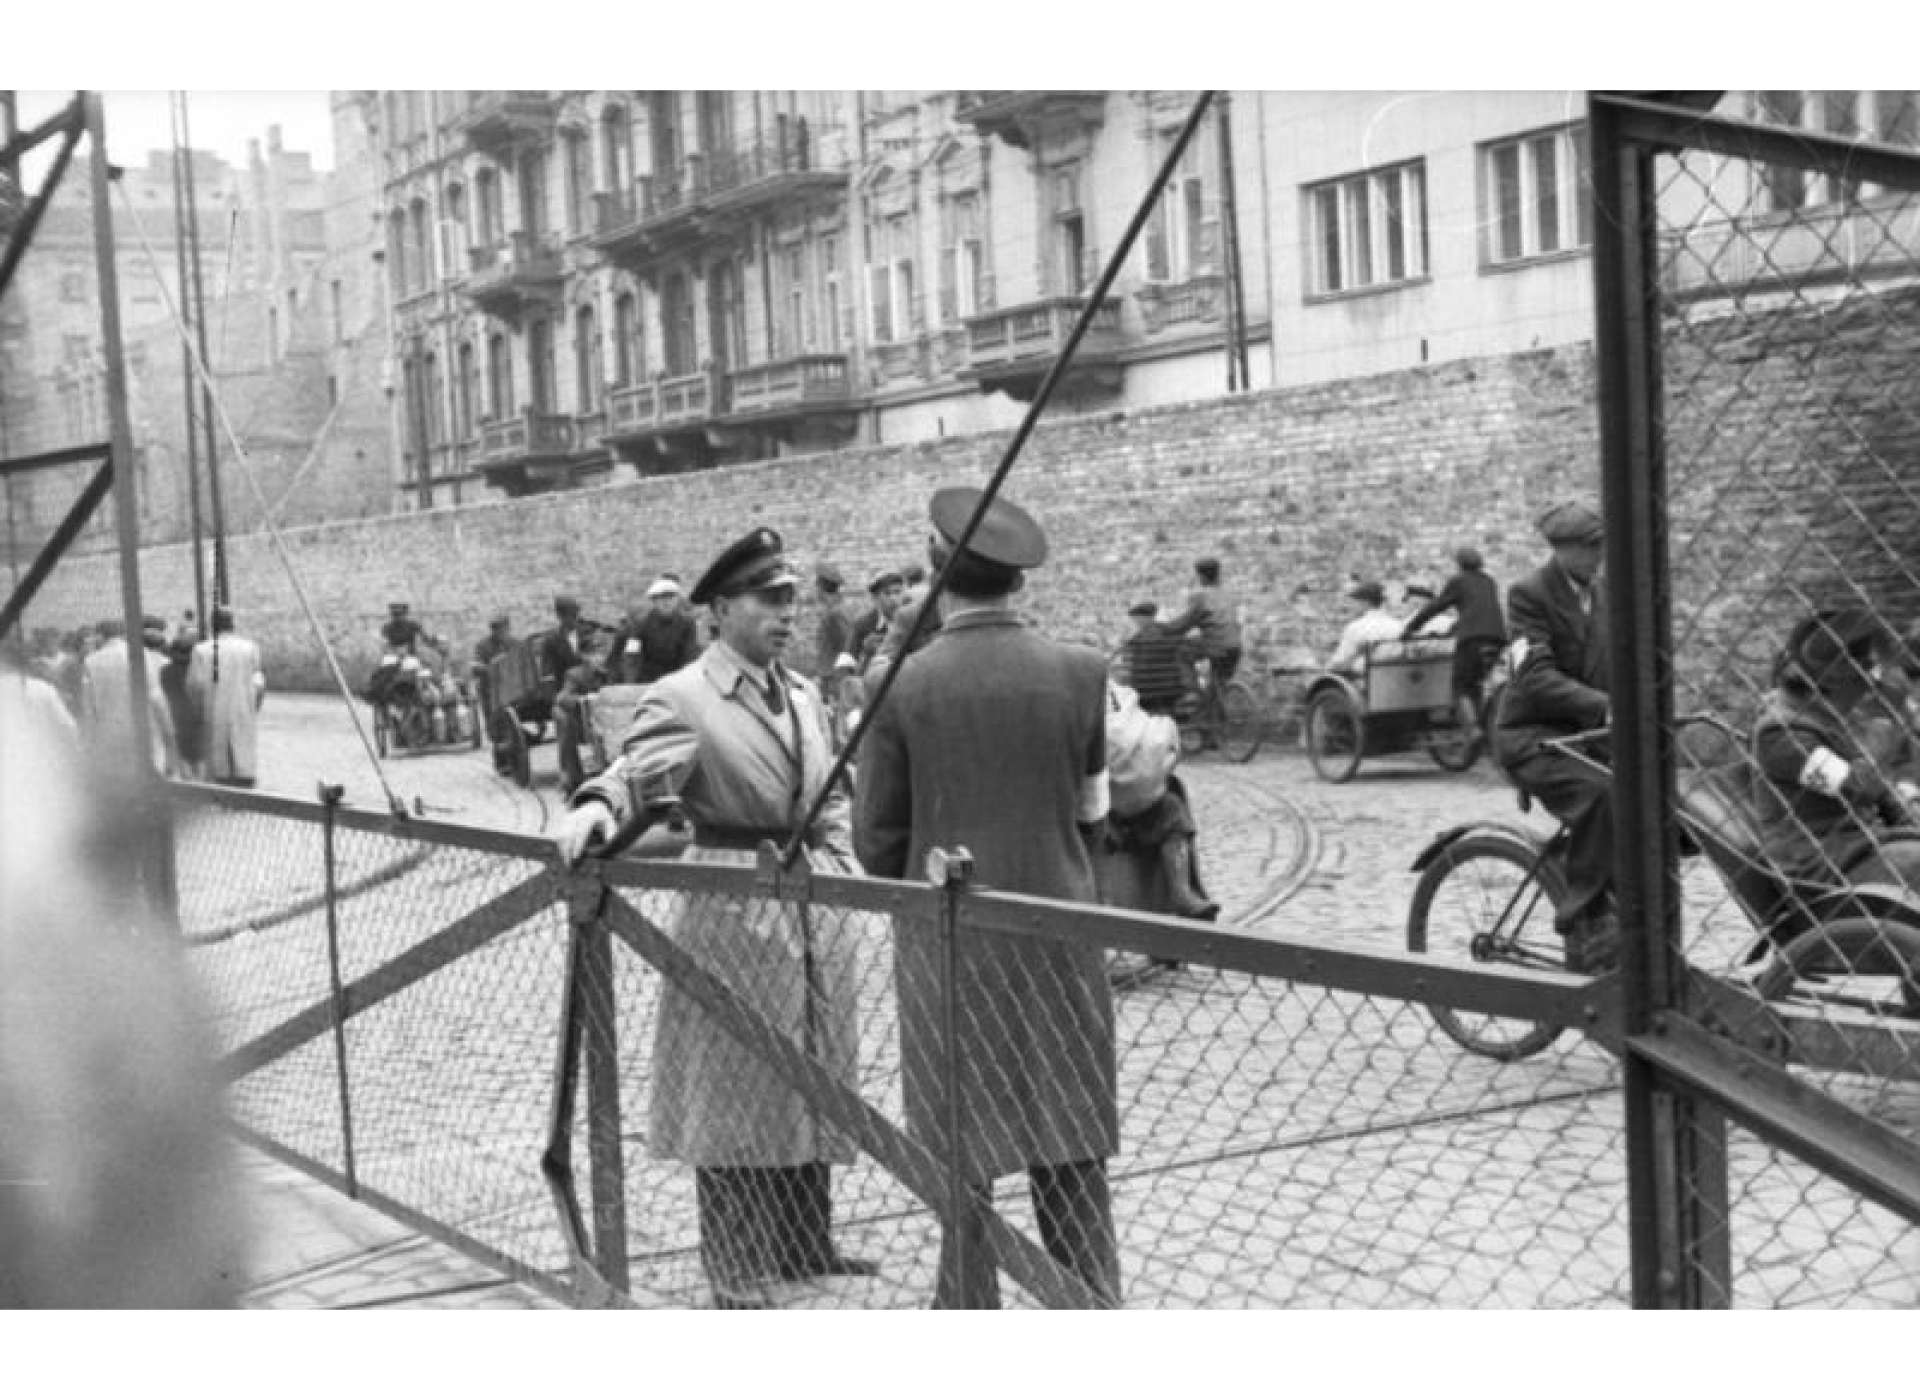 Men of the Jewish Order Service at the gates of the Warsaw Ghetto, June 1942. Credit: Bundesarchiv Bild 101I-270-0298-11, Polen, Ghetto Warschau, Drahtzaun.